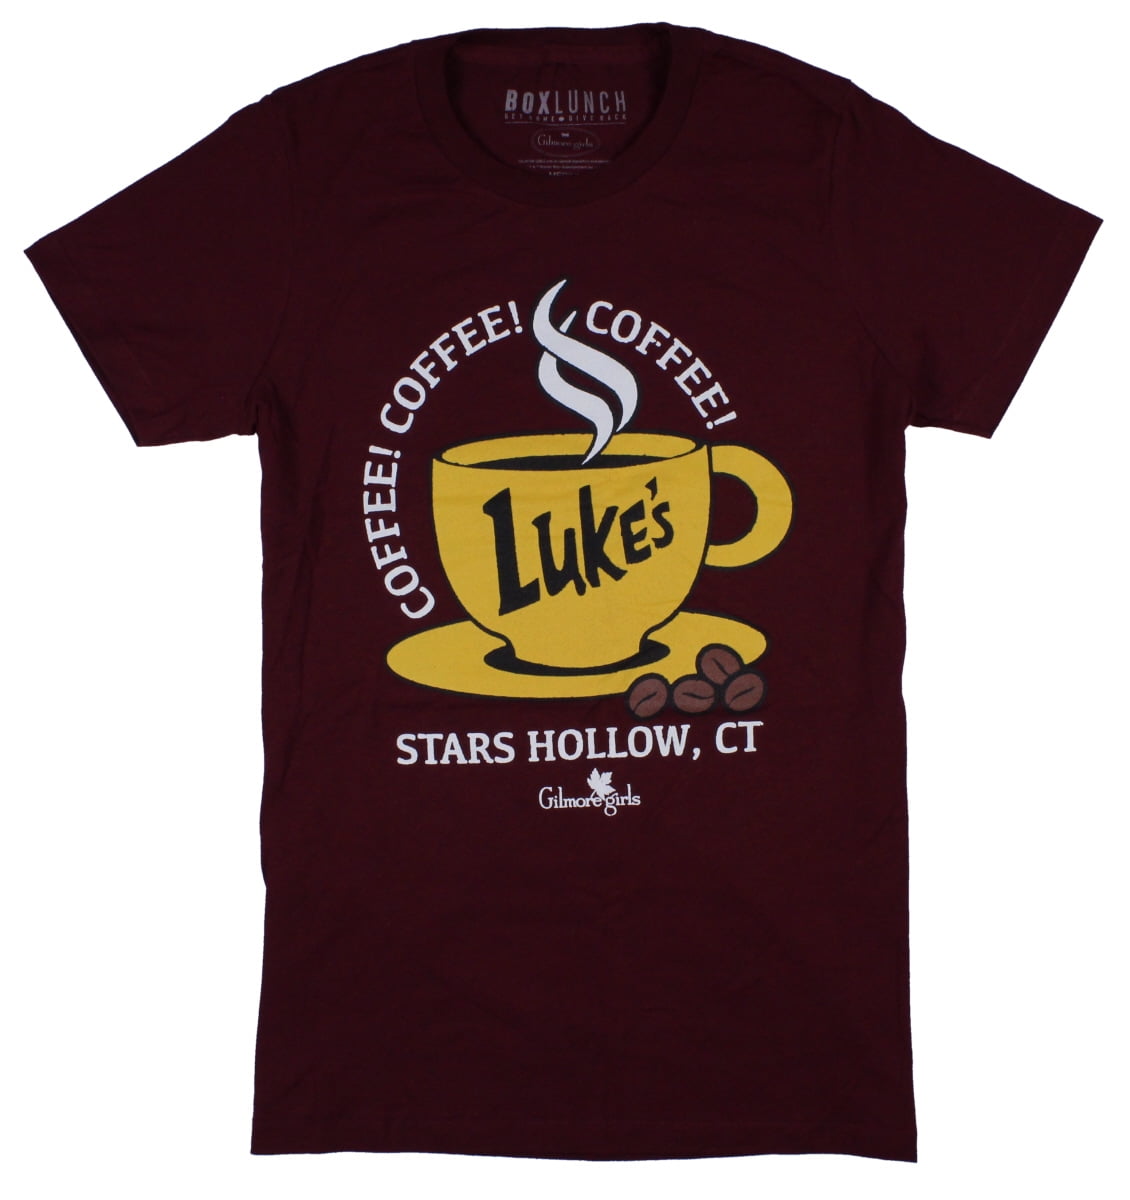 Luke's Coffee Shop Rory Shirt Stars Hollow Shirt Luke's Diner Unisex Shirt I'd Rather Be Watching Gilmore Girls Gilmore Girls Shirt